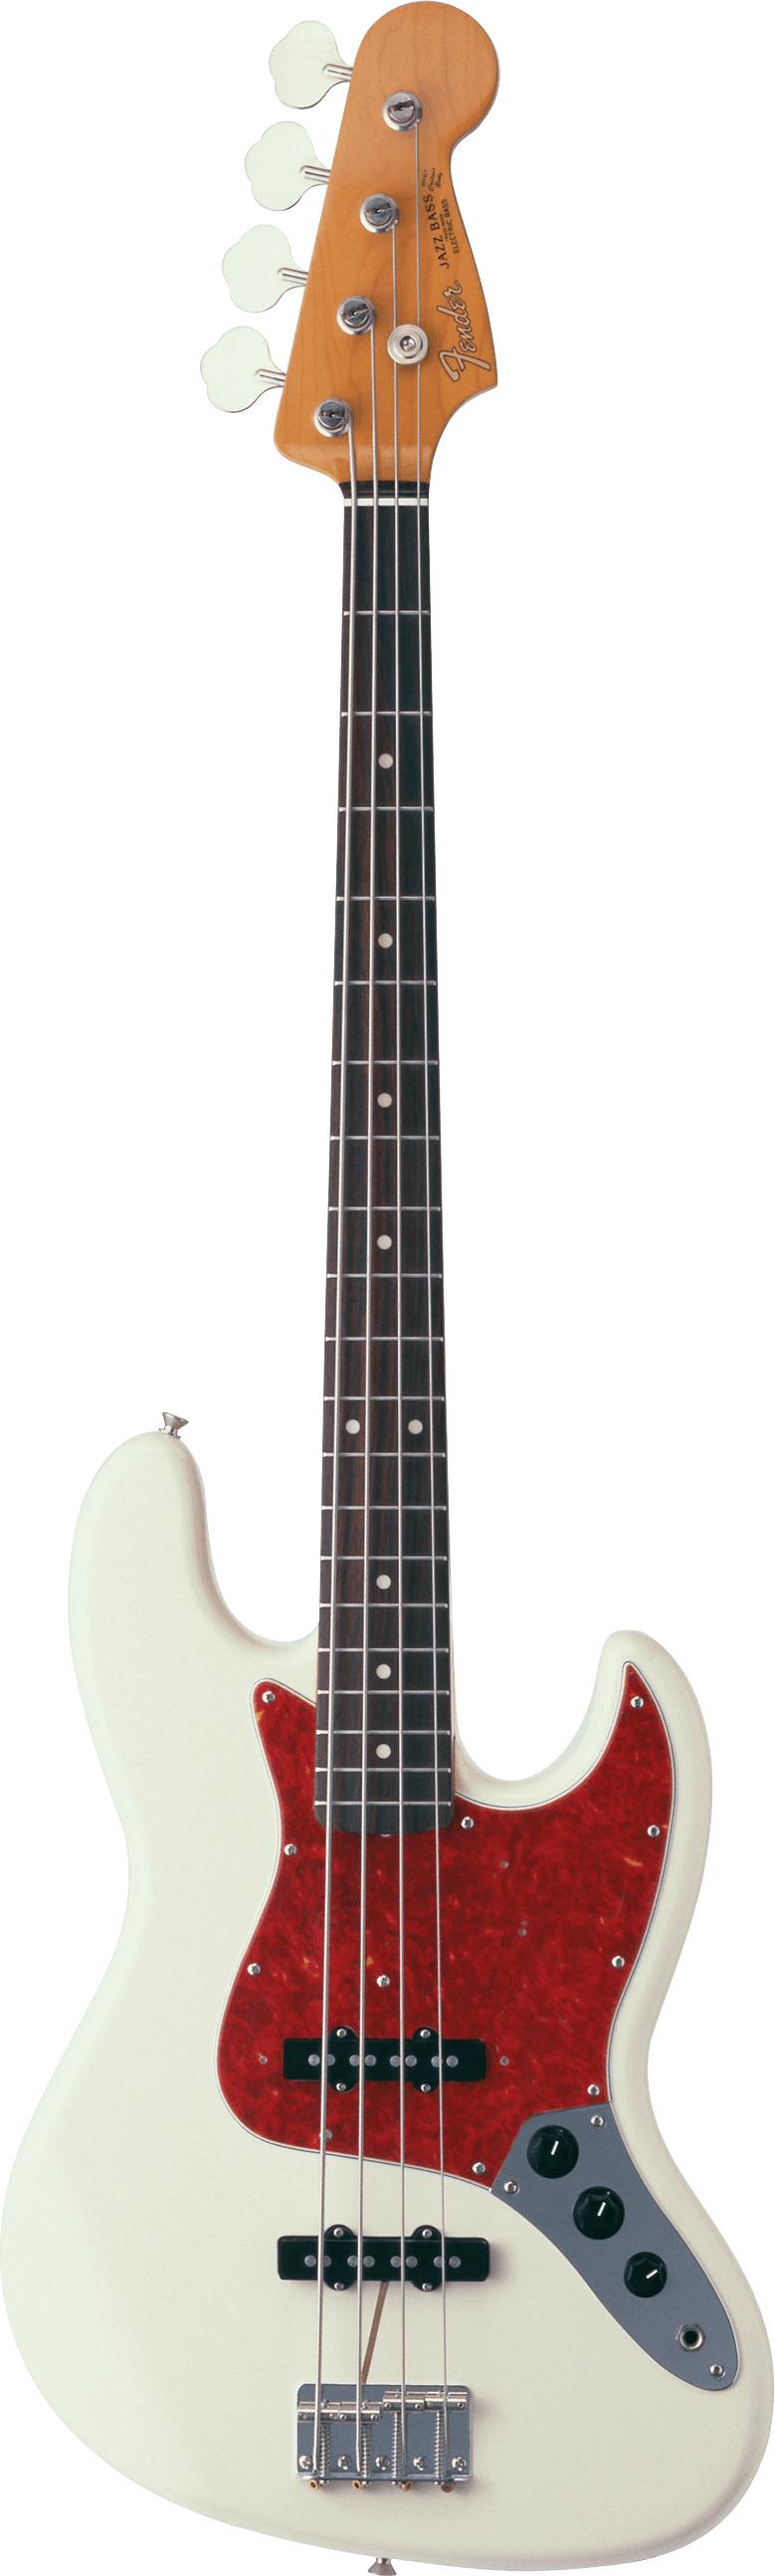 Fender Jazz Bass Guitar png transparent